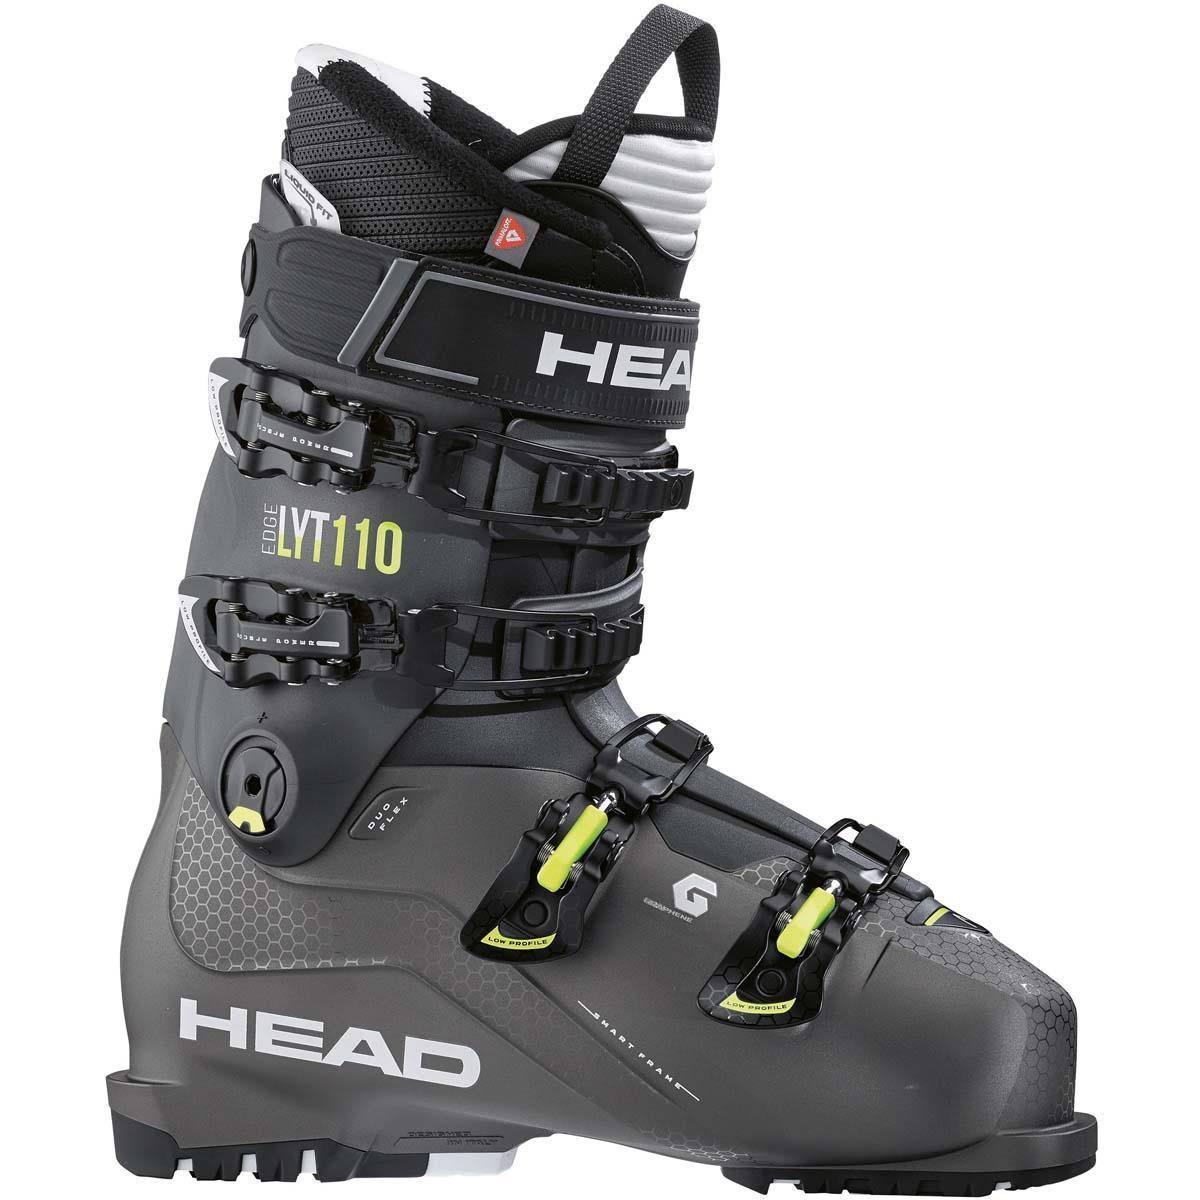 Head Head Edge Lyt Ski Boots Hv 110 Gw